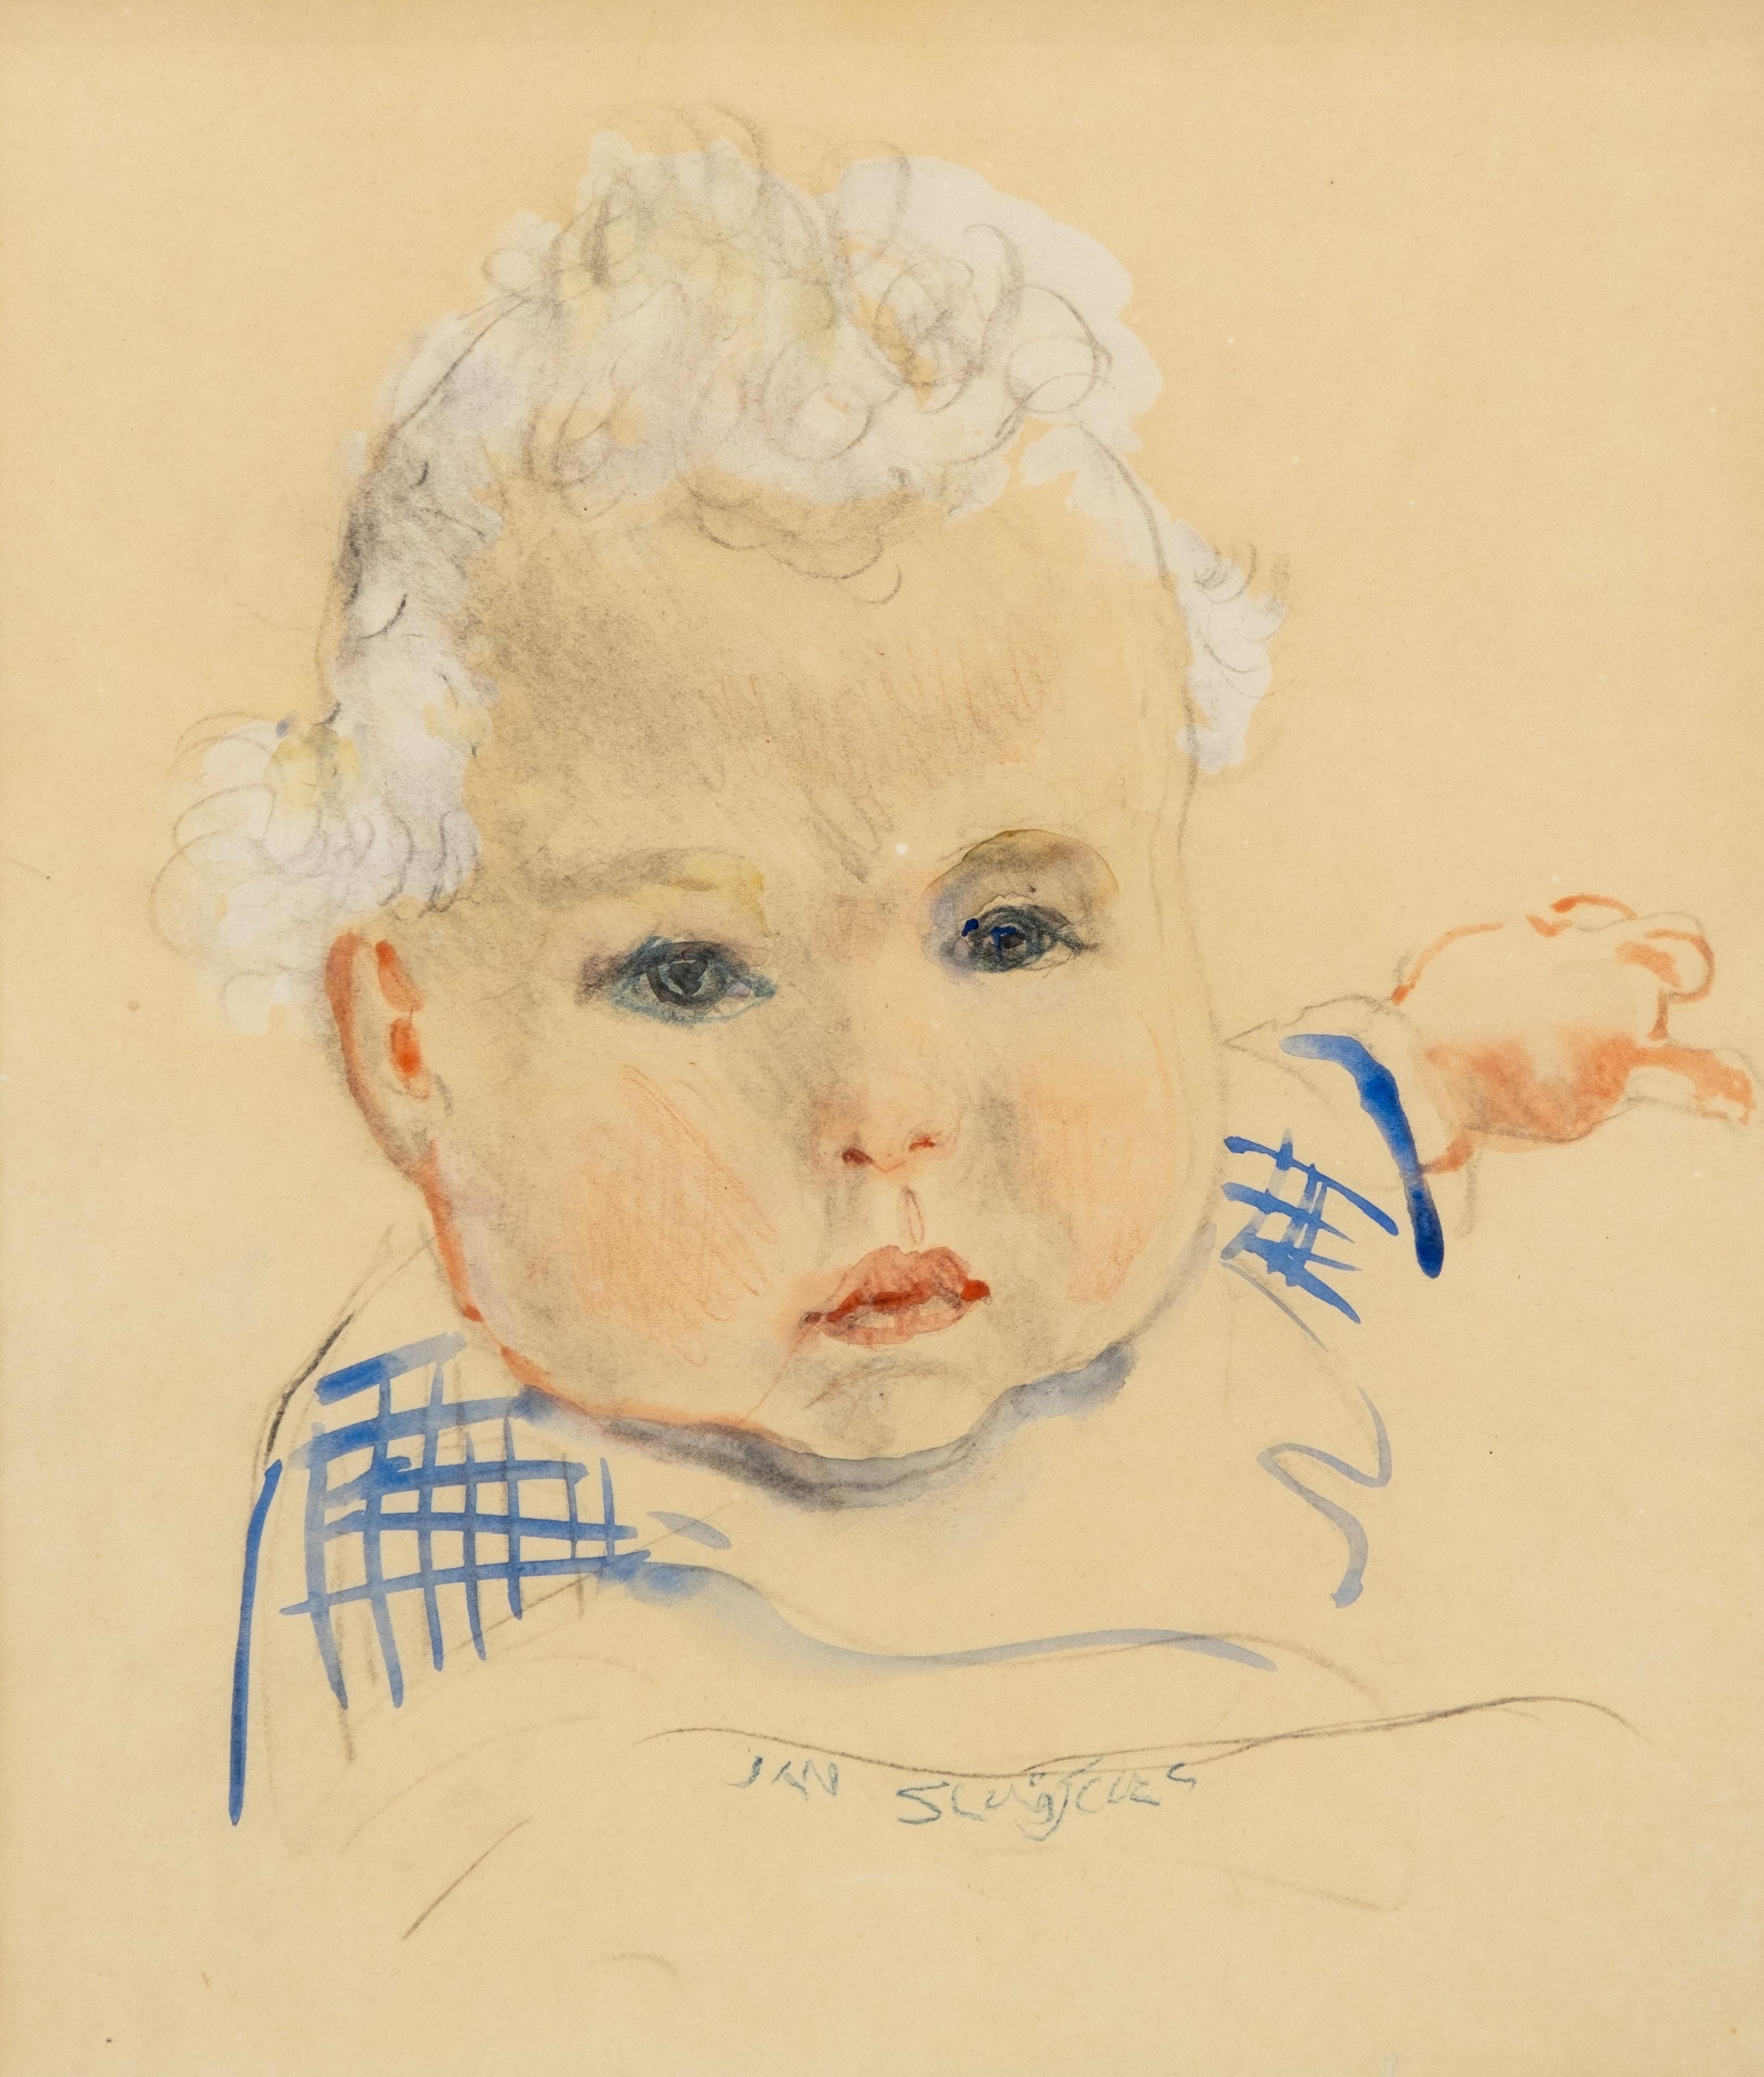 A portrait of a baby boy